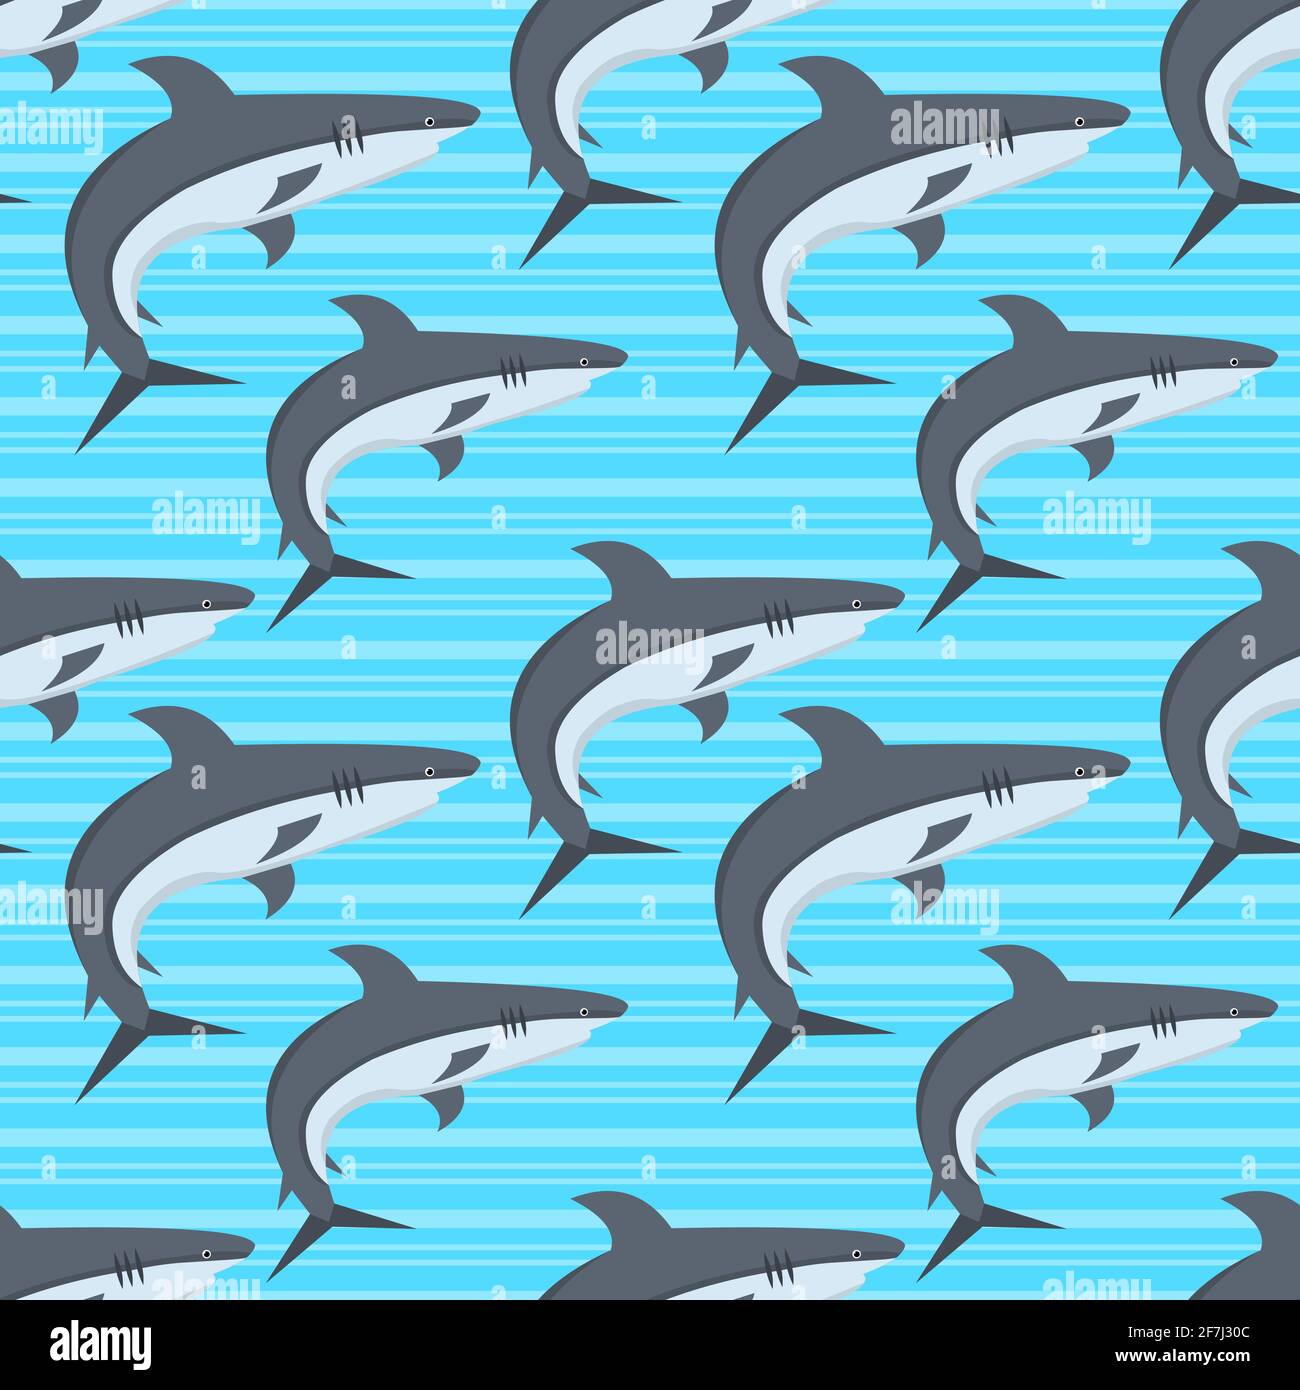 shark fish seamless pattern vector illustration Stock Vector